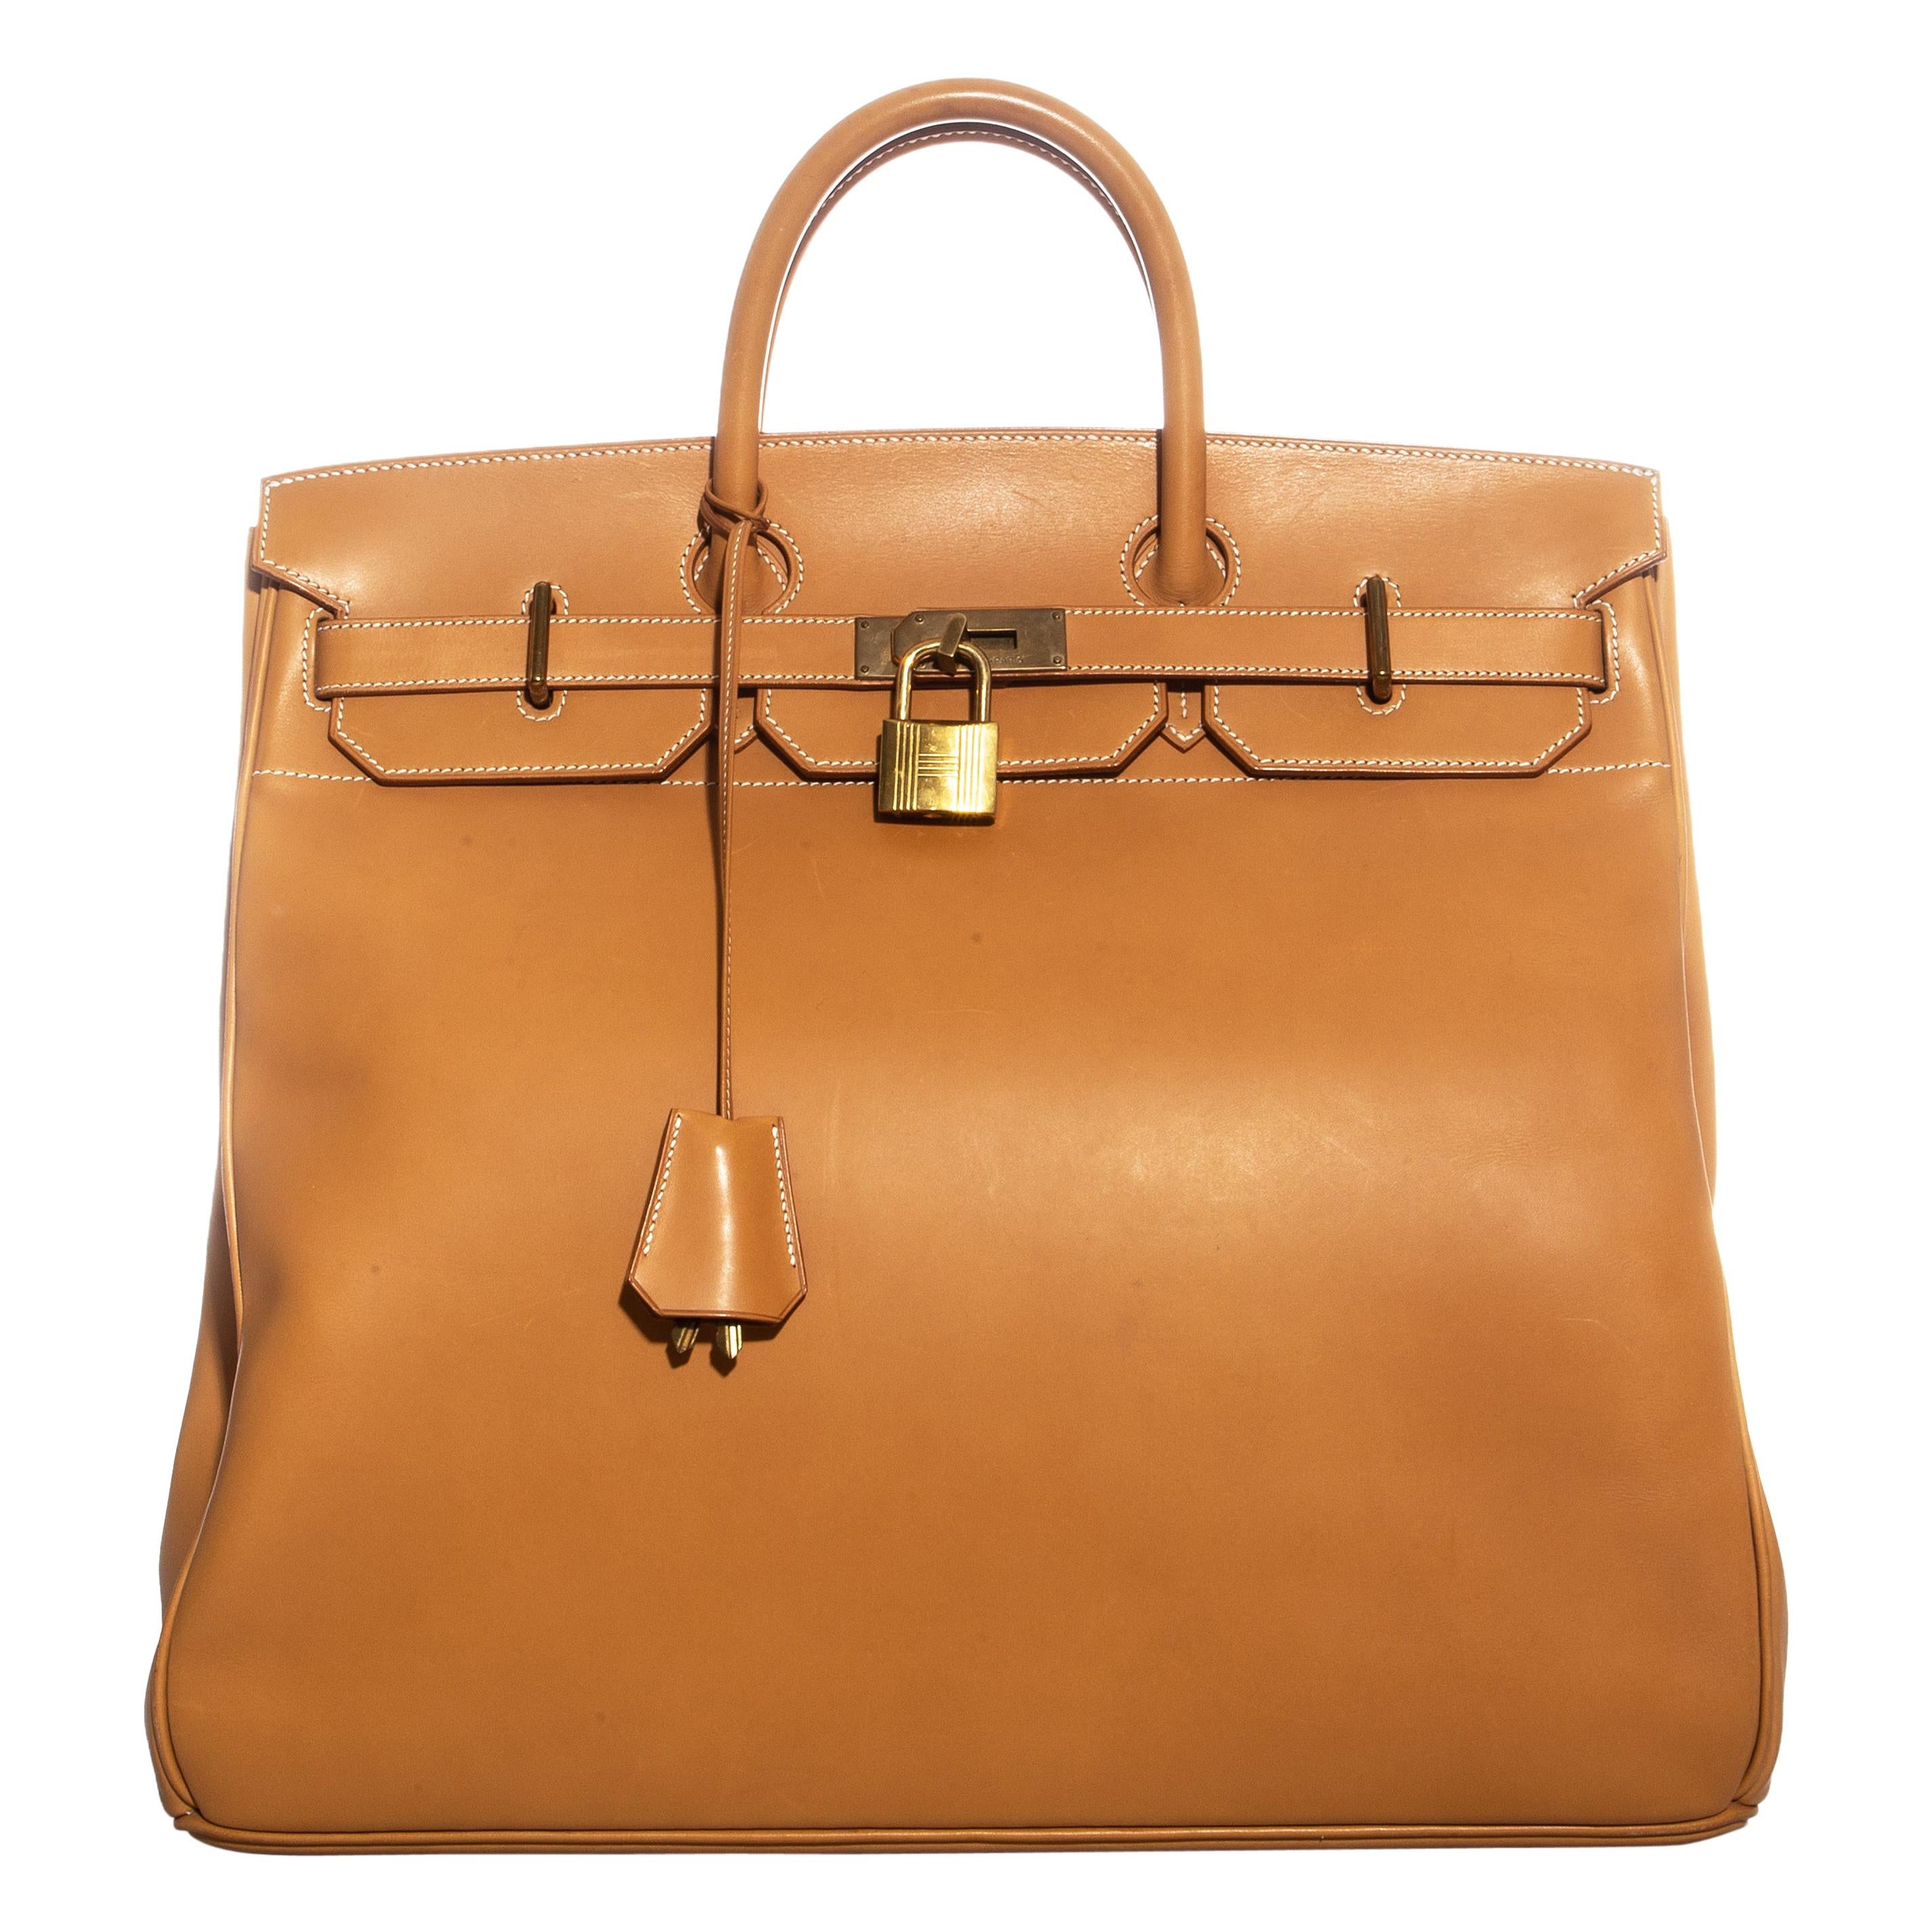 Hermes Tan leather HAC Birkin bag, size 45, c. 1998 